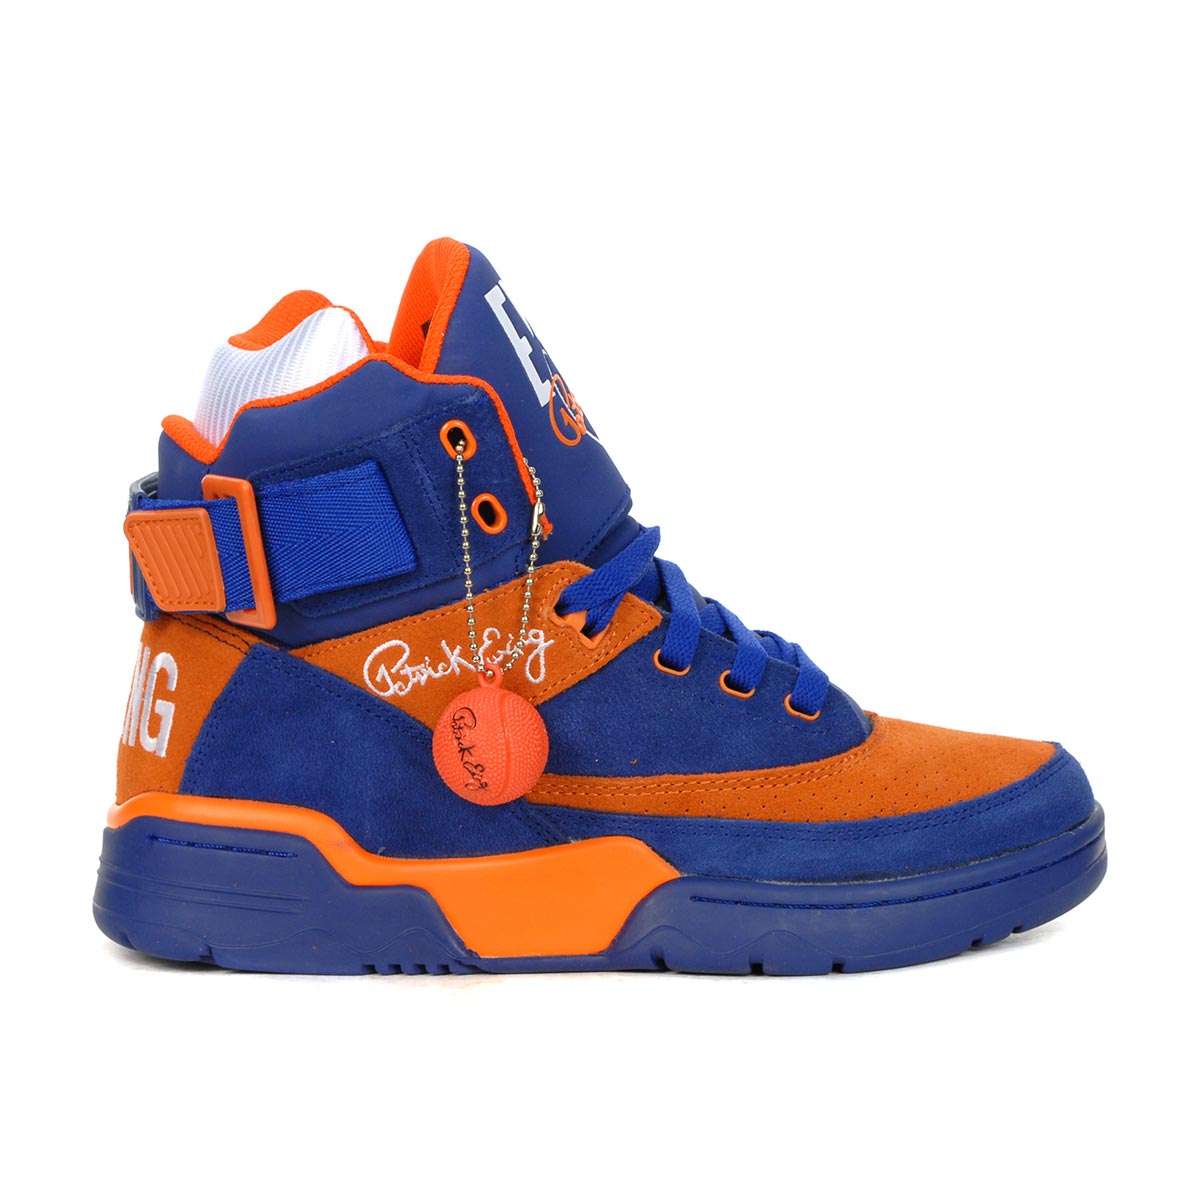 Patrick Ewing 33 HI NYC Dazzling Blue/Orange Basketball Shoes